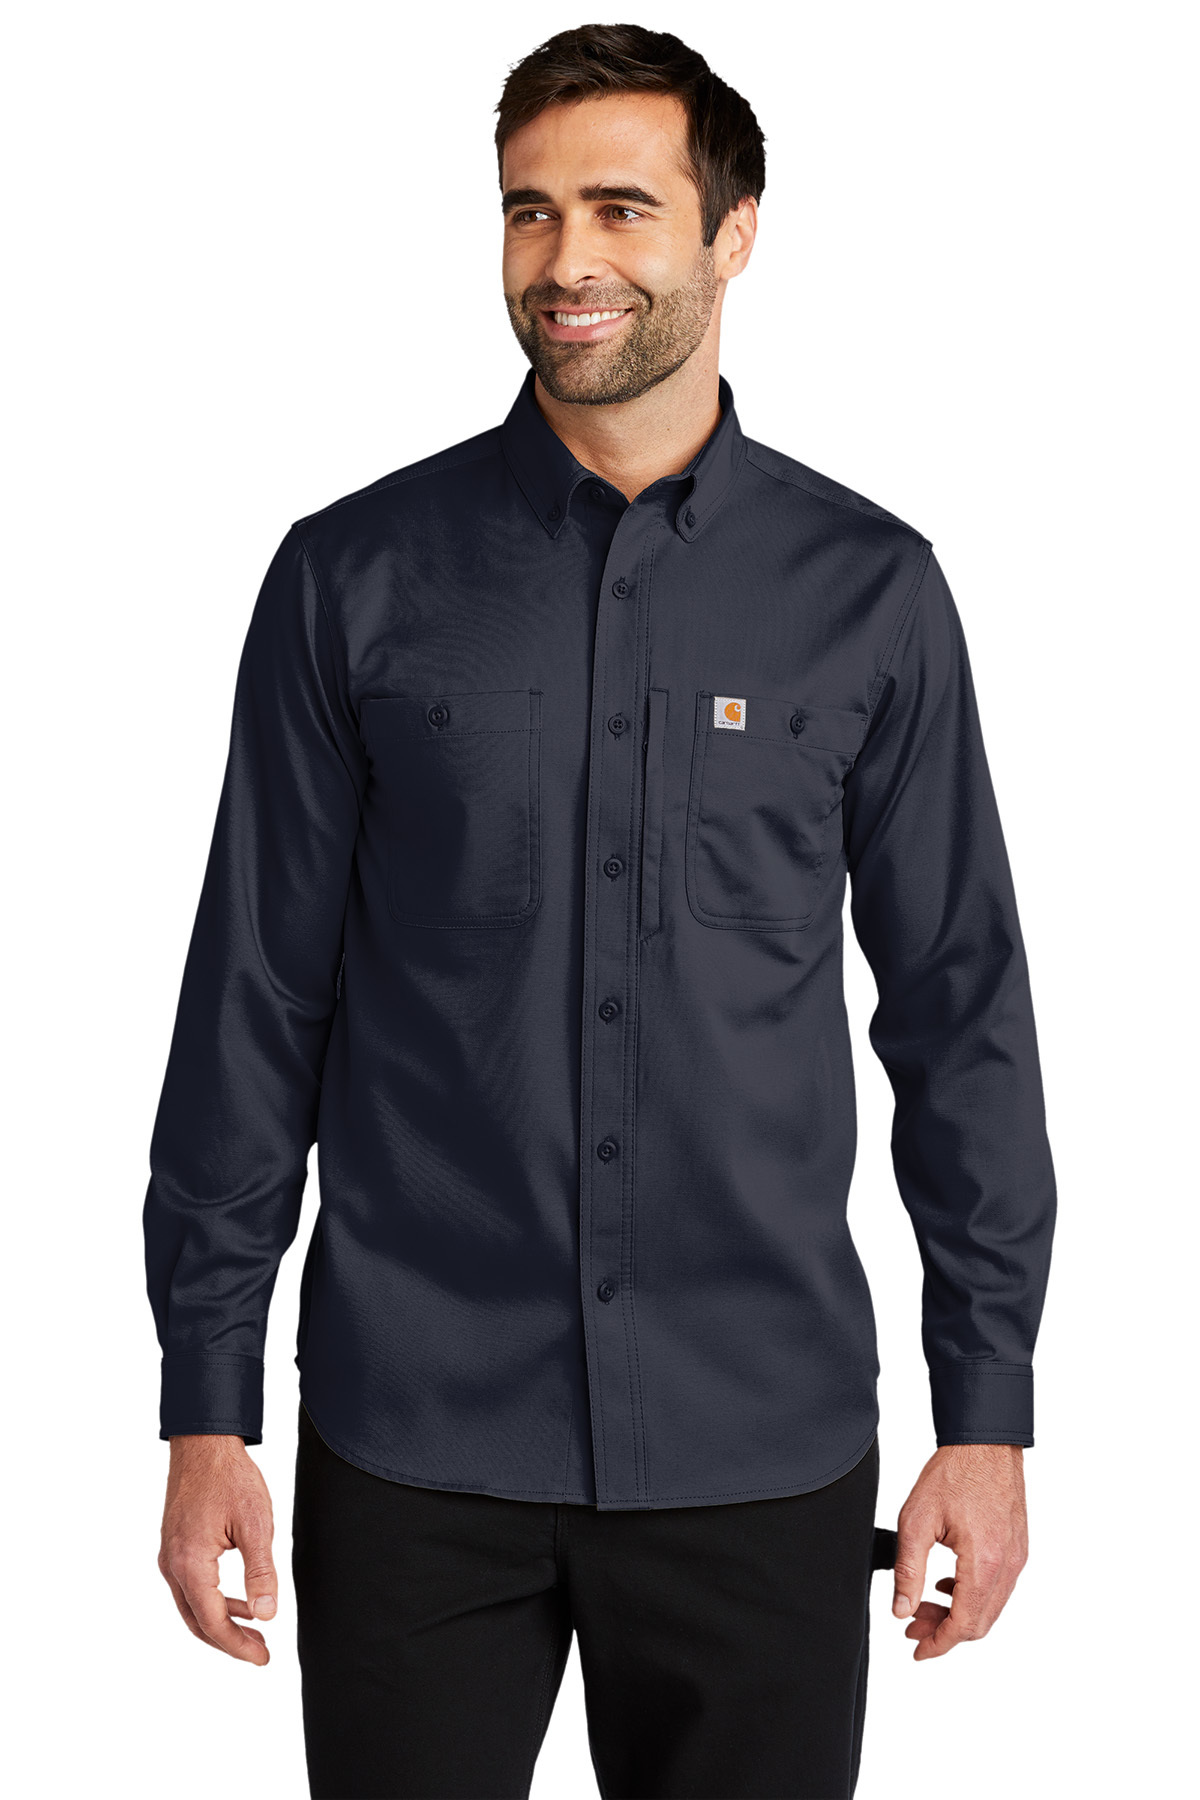 Carhartt Rugged Series Shirt | SanMar | Professional Product Long Sleeve